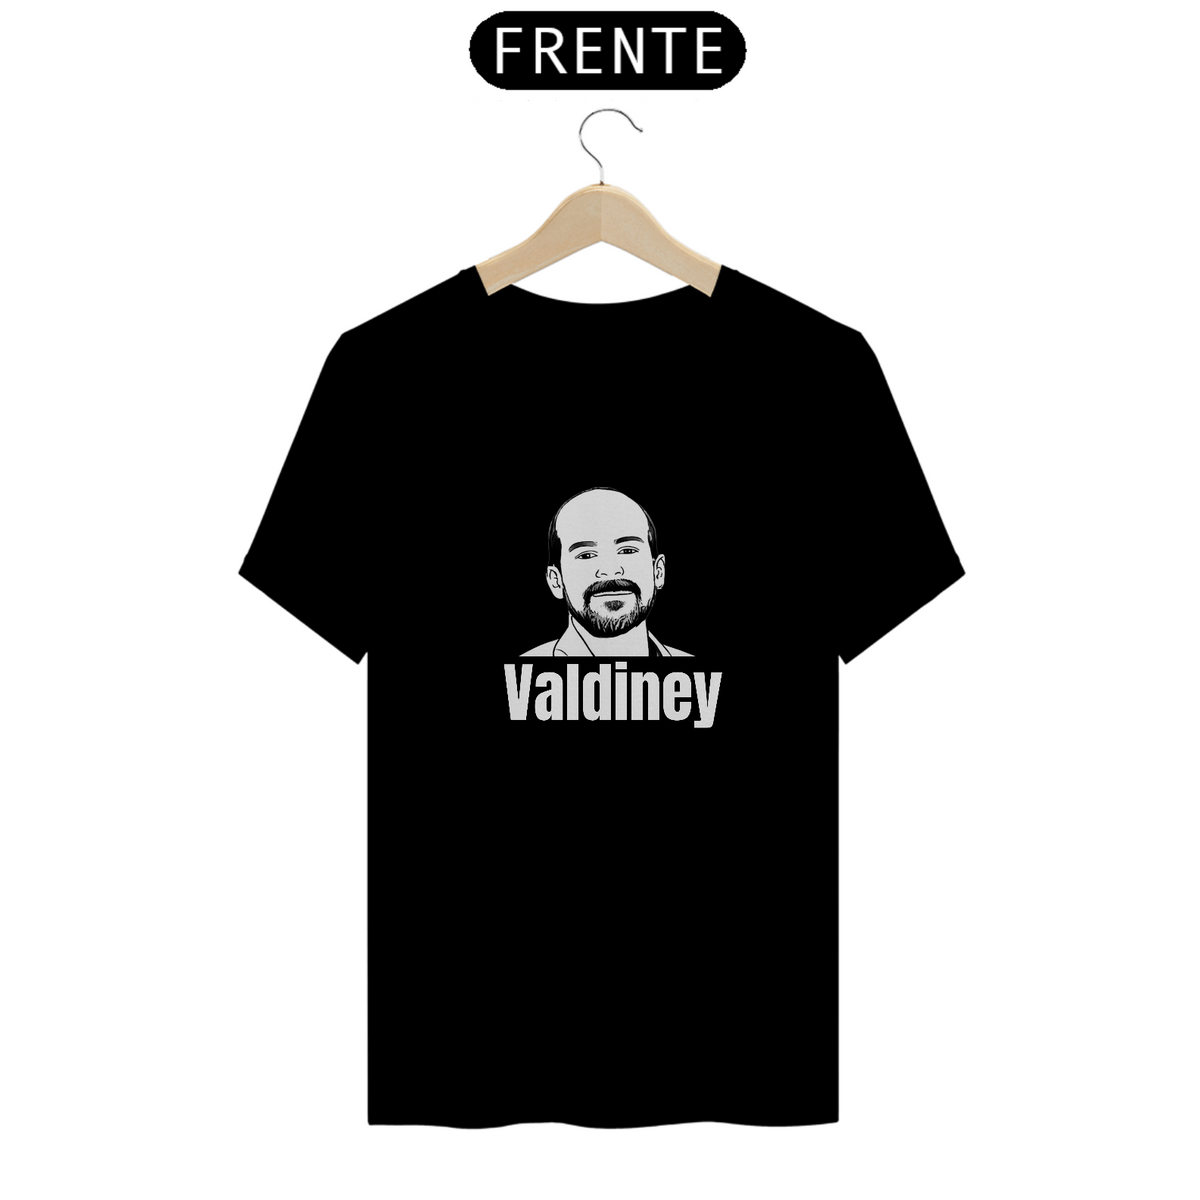 Nome do produto: Camisa Valdiney